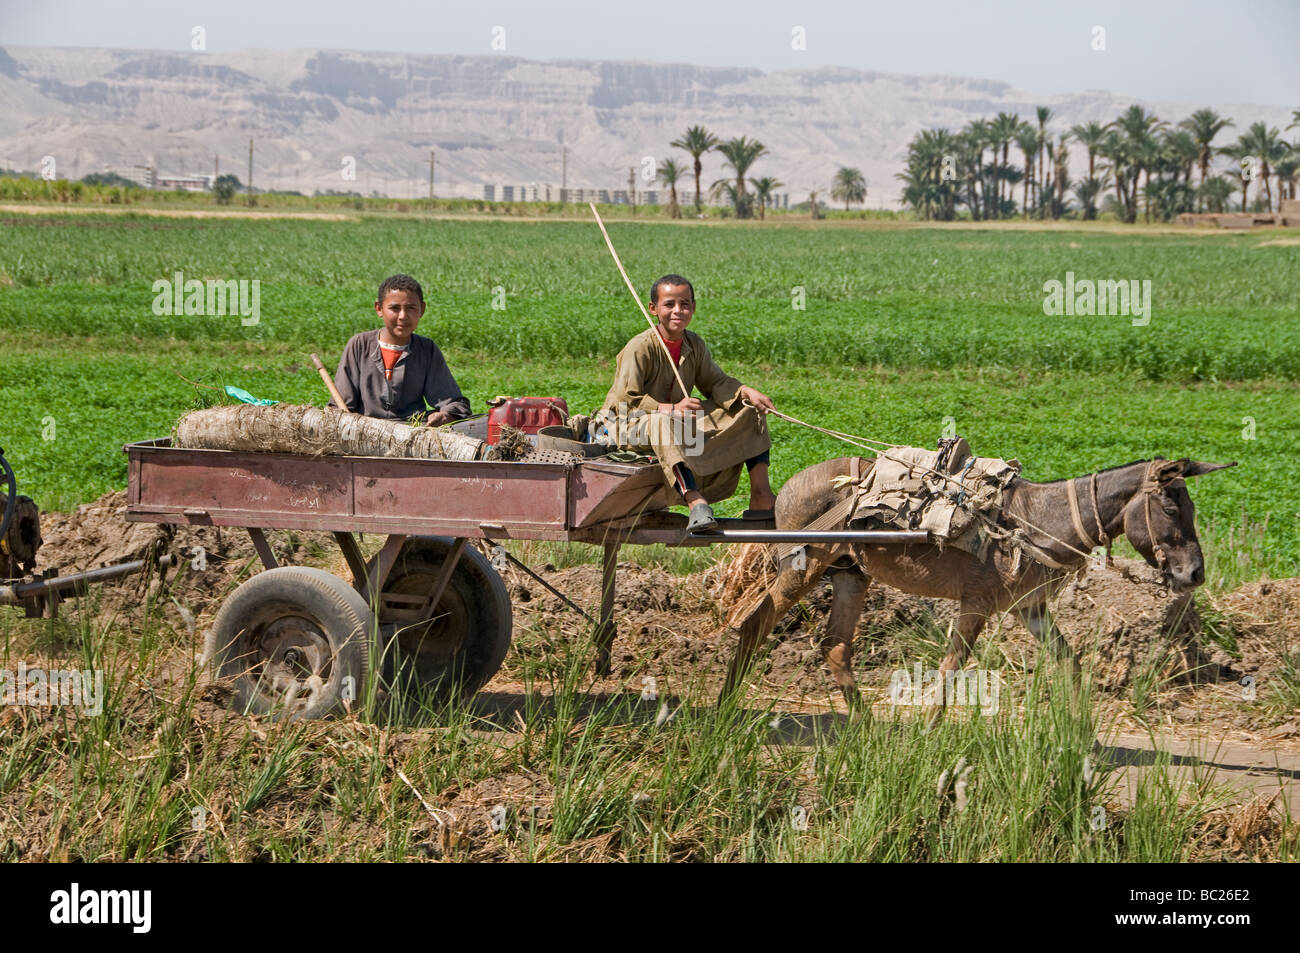 Nile River Ägypten Bauernhof Landwirt Landwirtschaft Feld zwei jungen Eselskarren Stockfoto